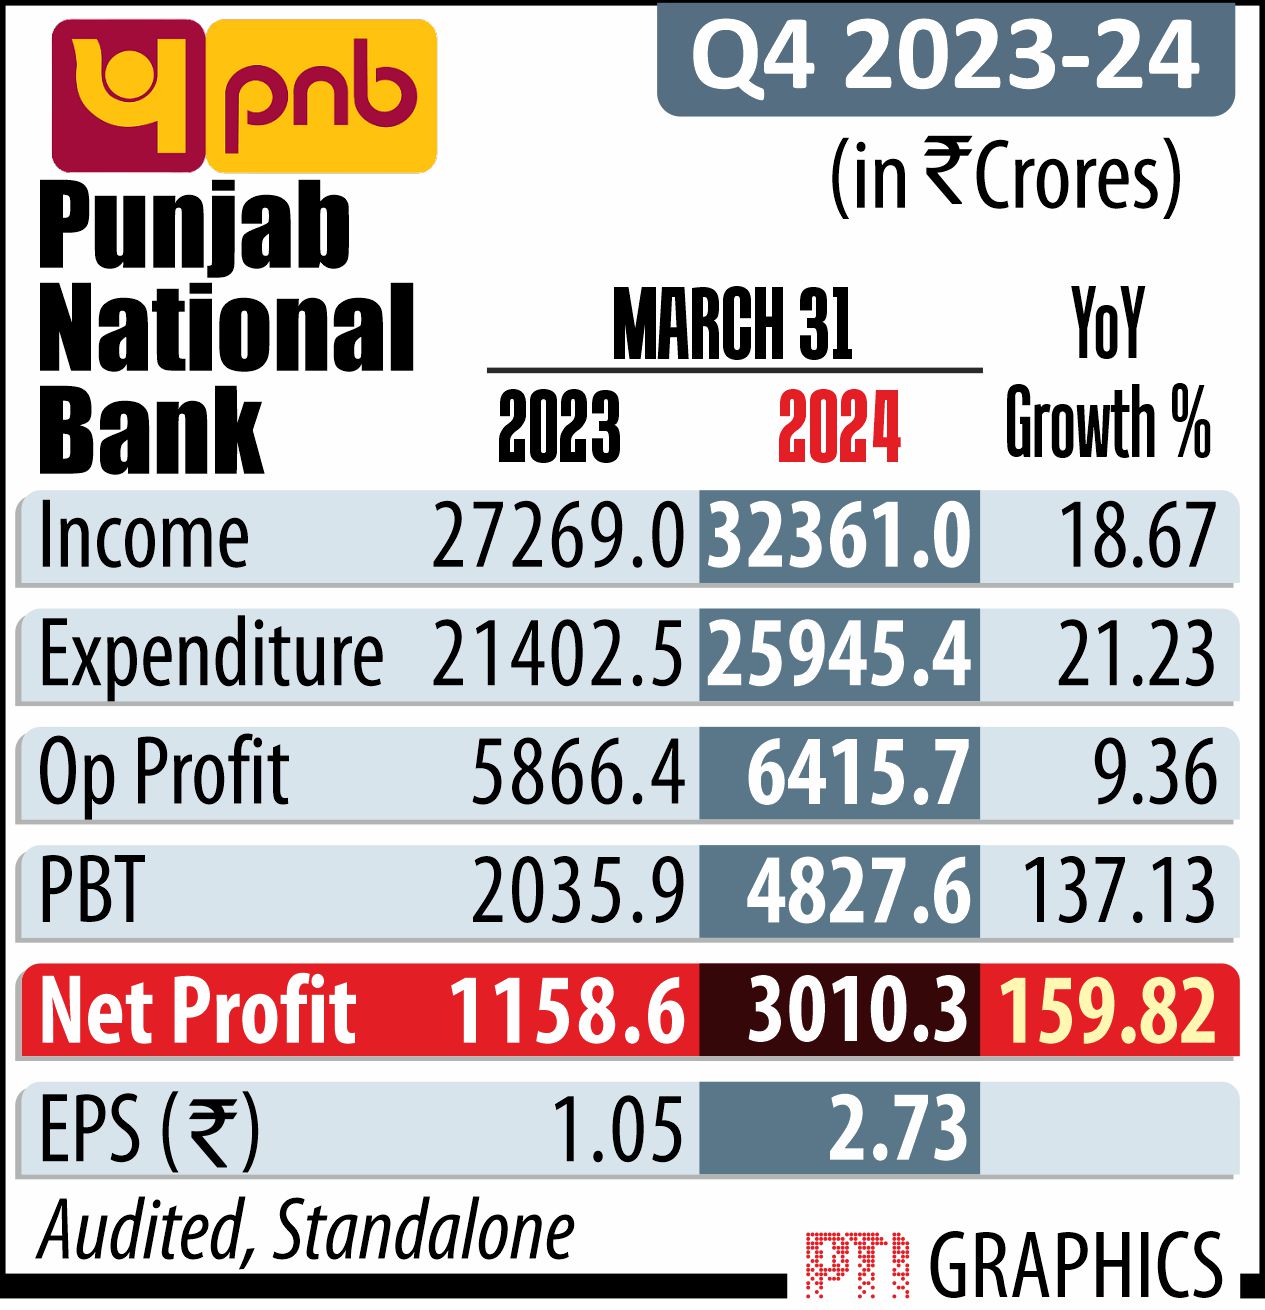 pnb q4 profit jumps nearly three-fold to 16-quarter high of rs 3,010 crore